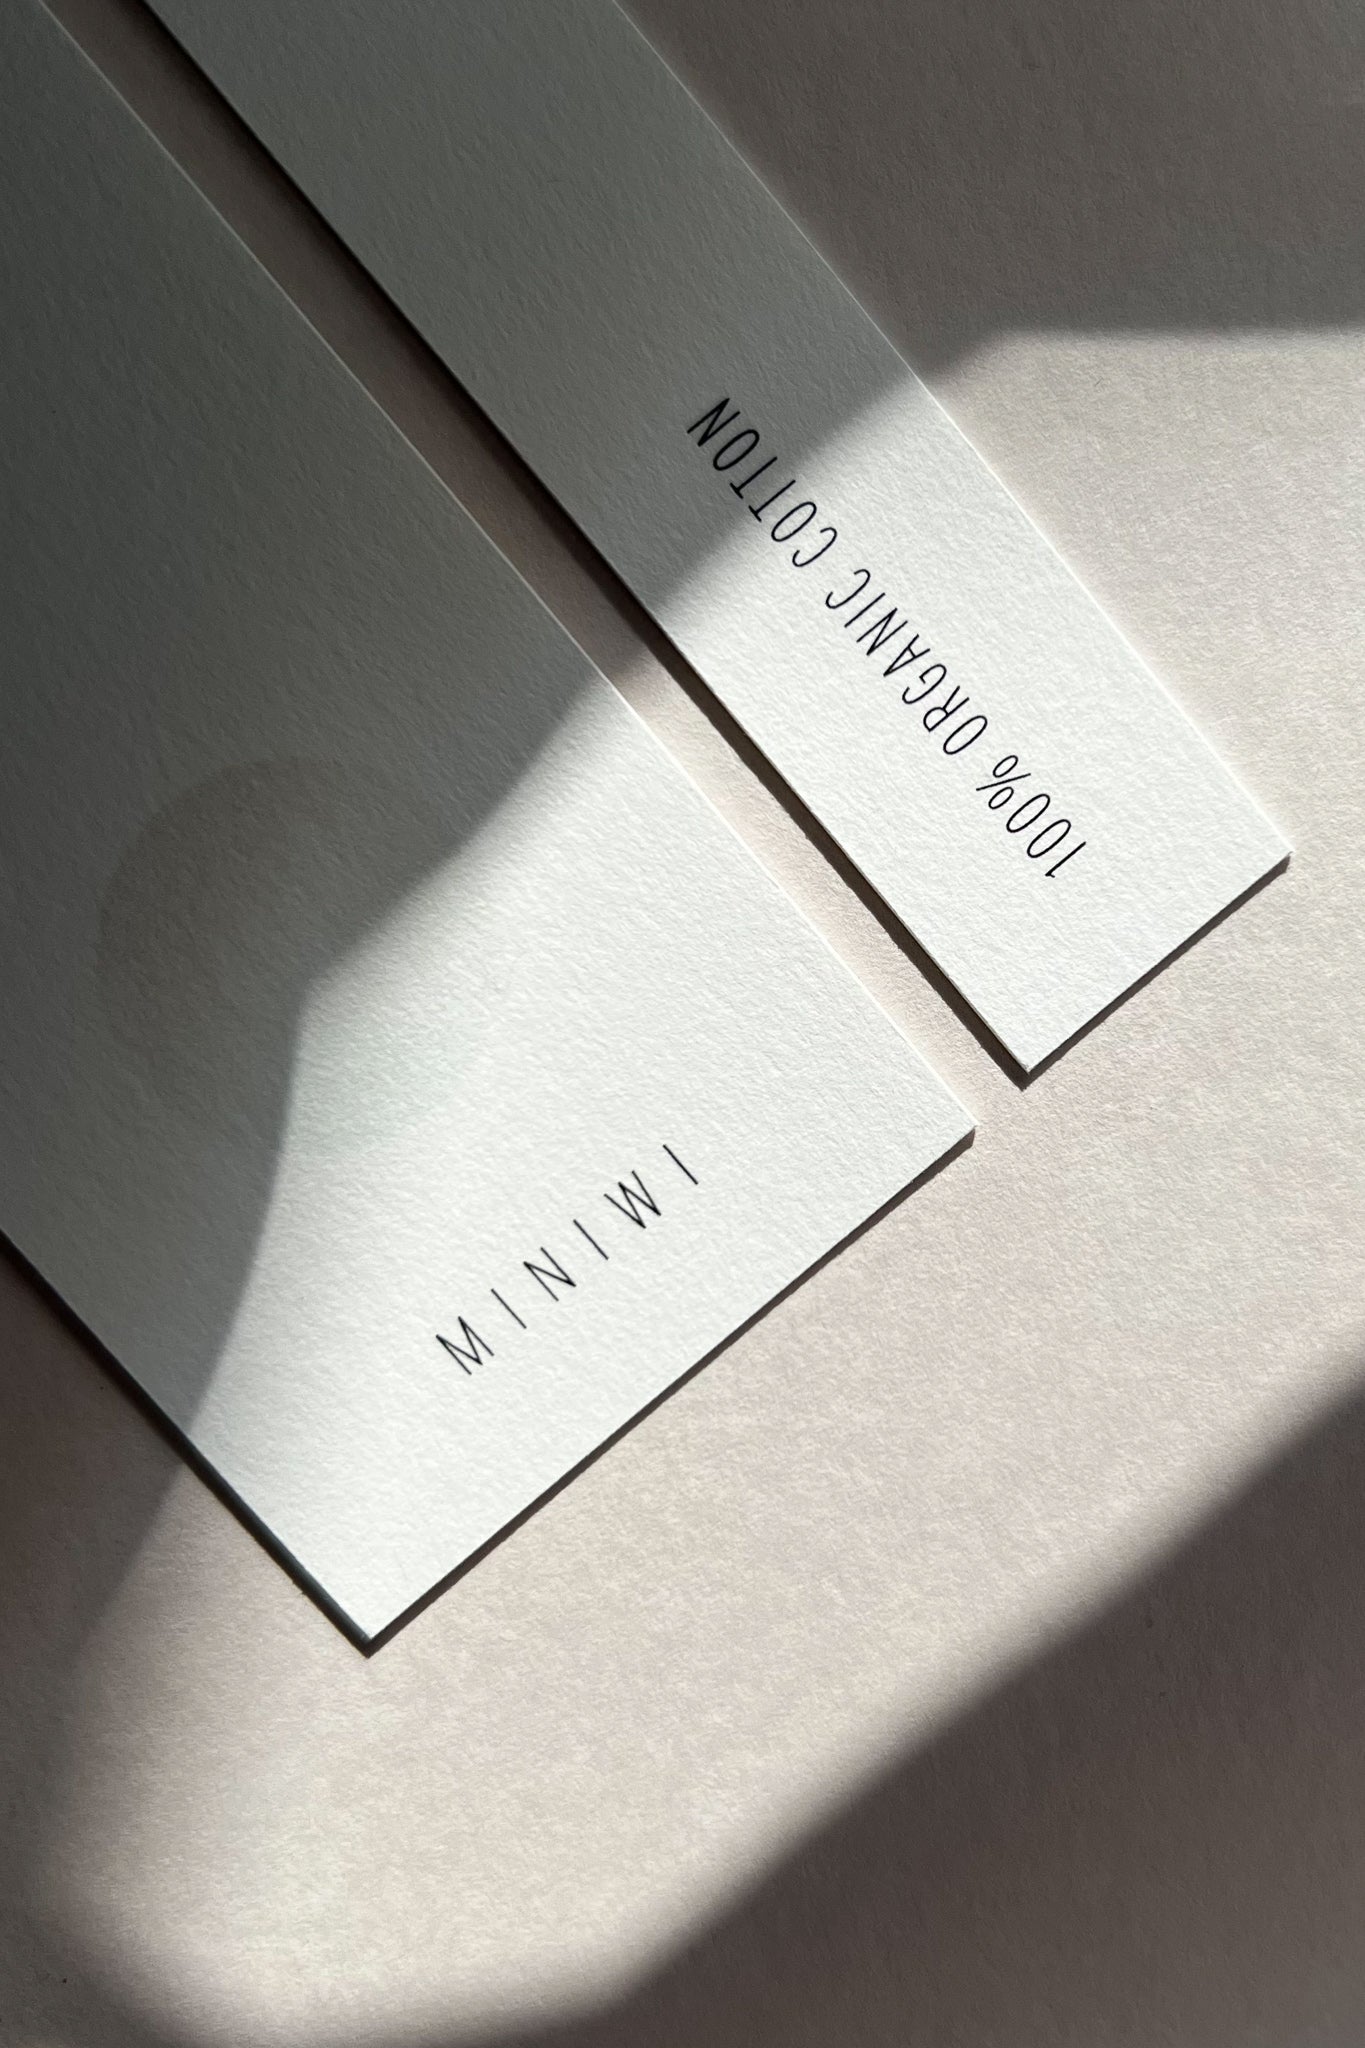 Two minimalistic tags. Miniwi and 100% organic cotton text